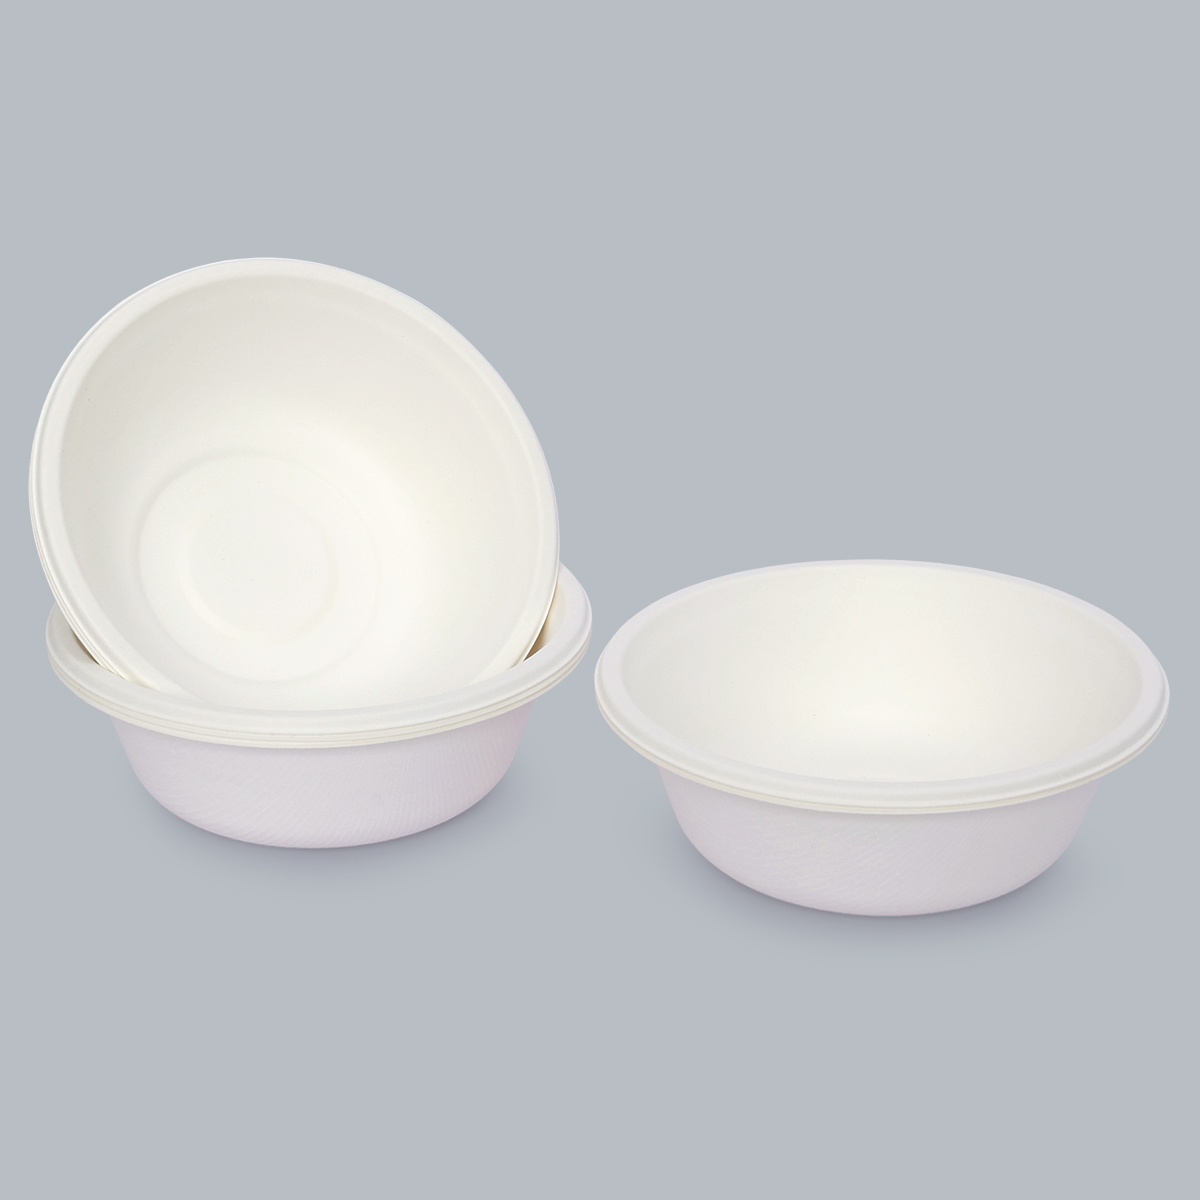 500ml Party bowls Antibacterial bowls environmentally friendly tableware